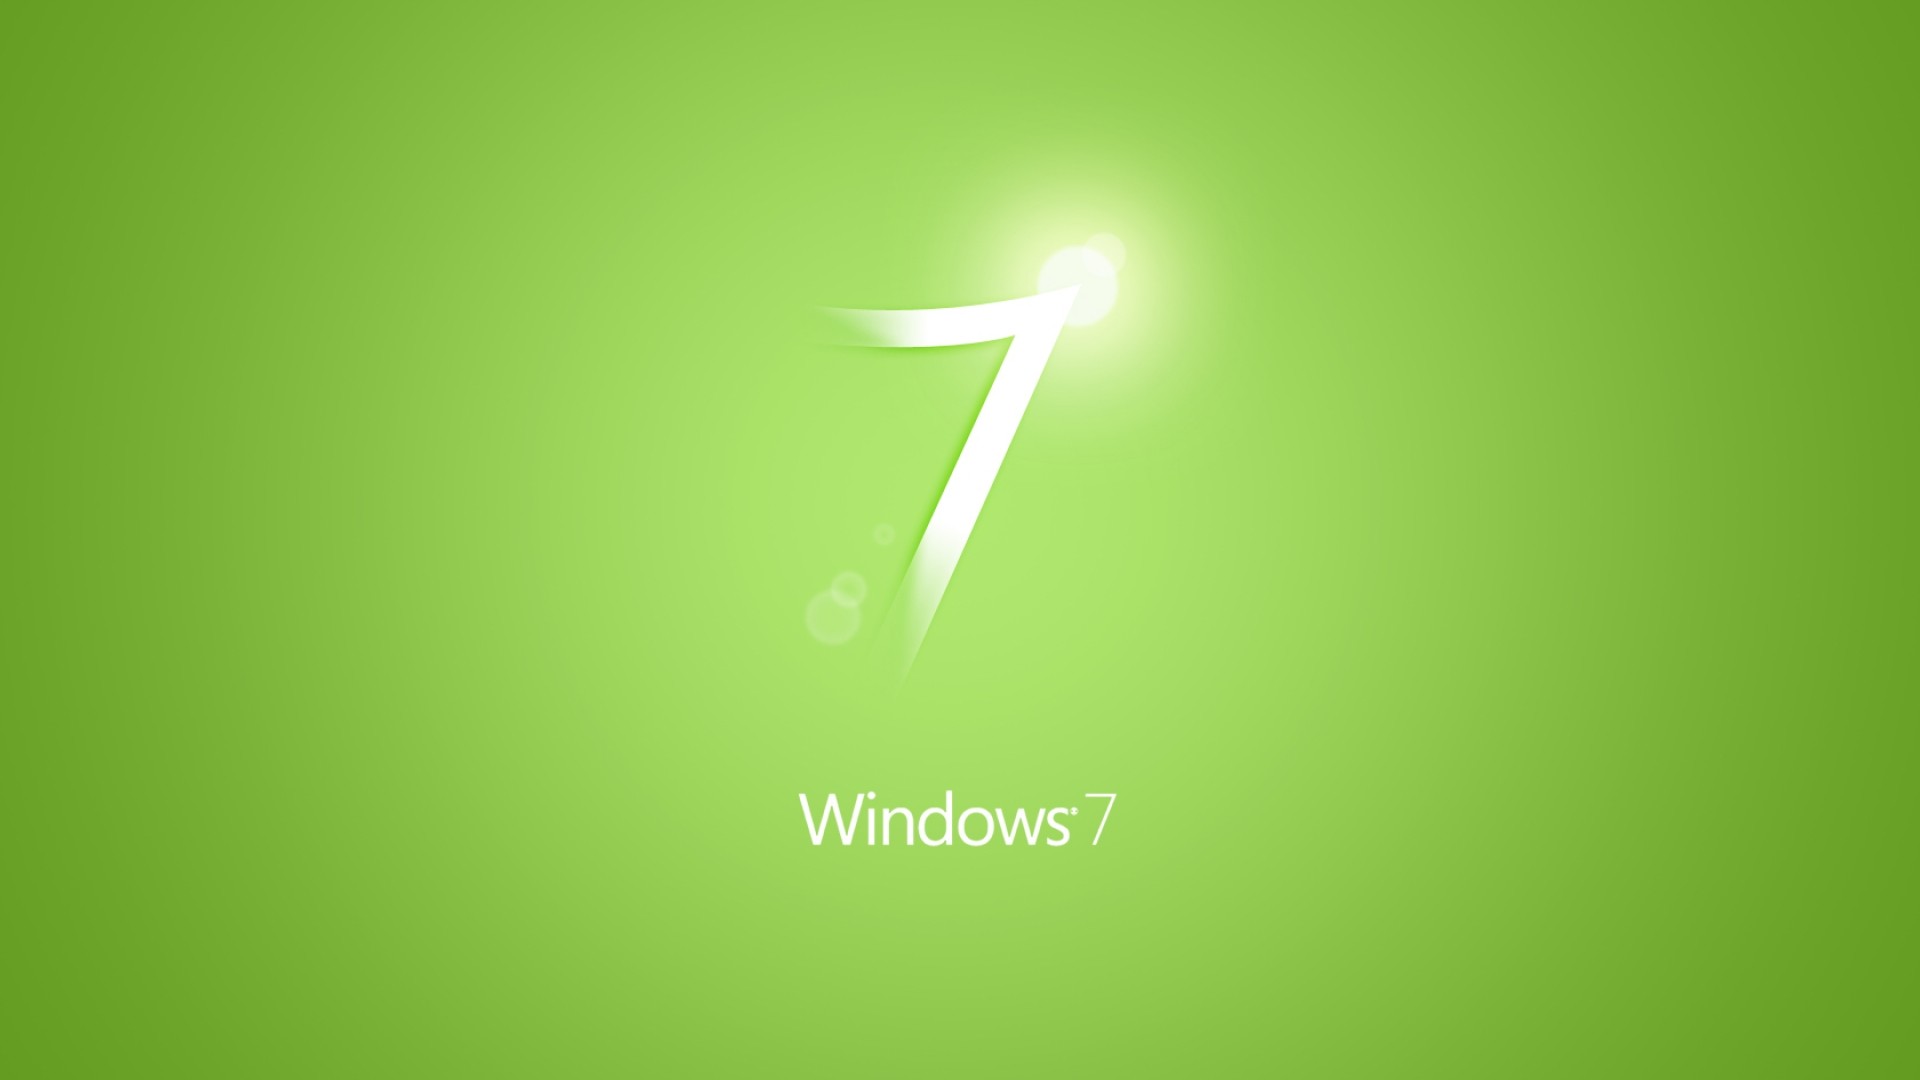 1920x1080 Simple green Windows 7 logo